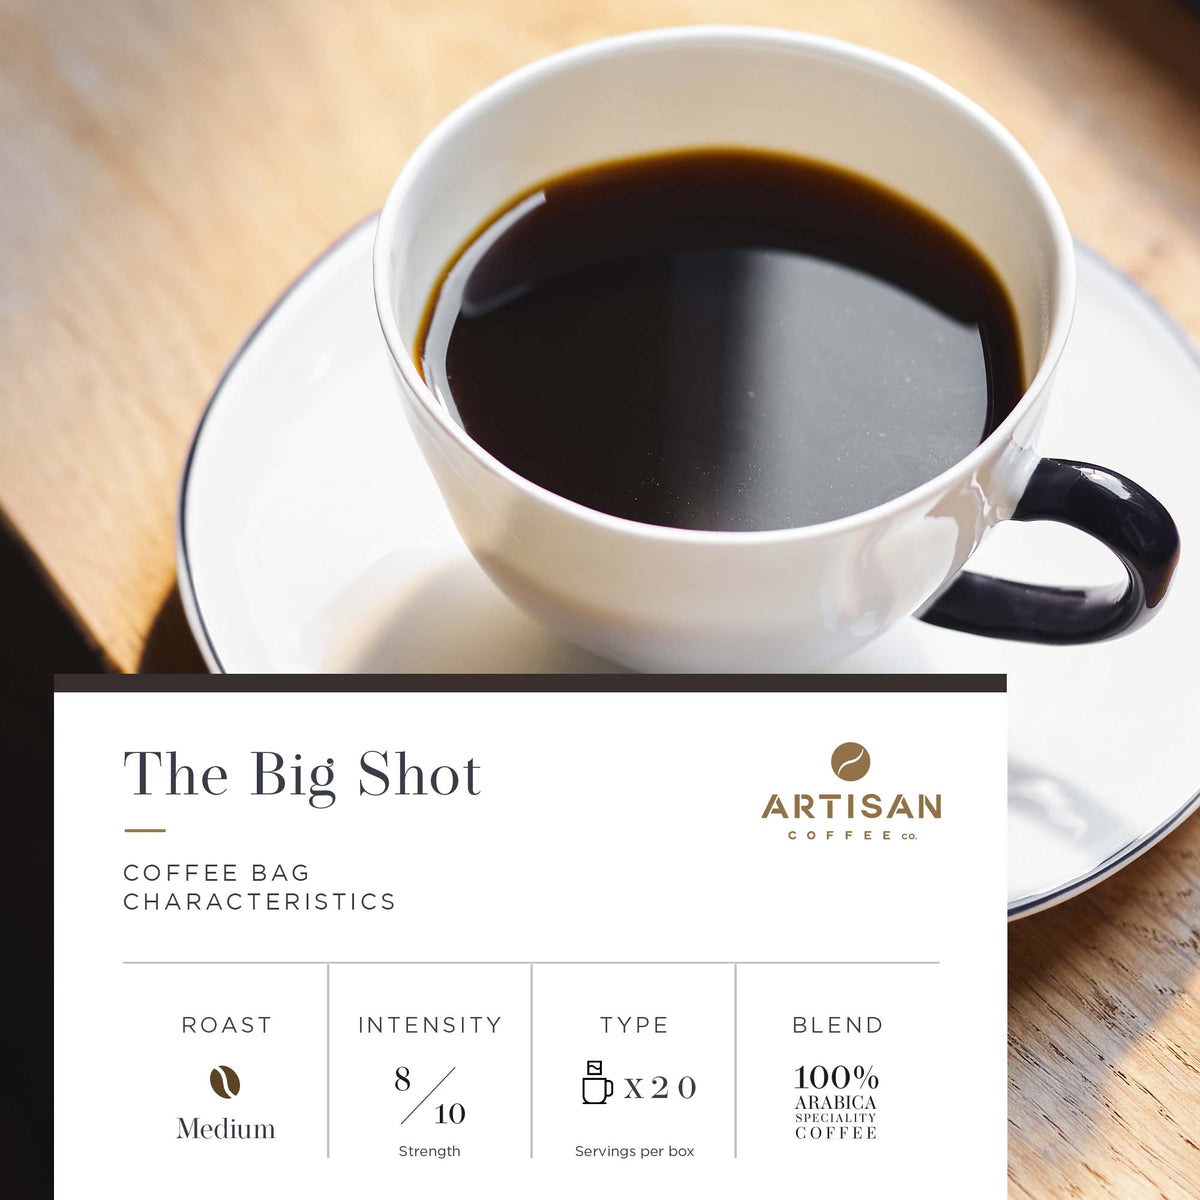 Artisan Coffee Co the big shot coffee bag infographic characteristics